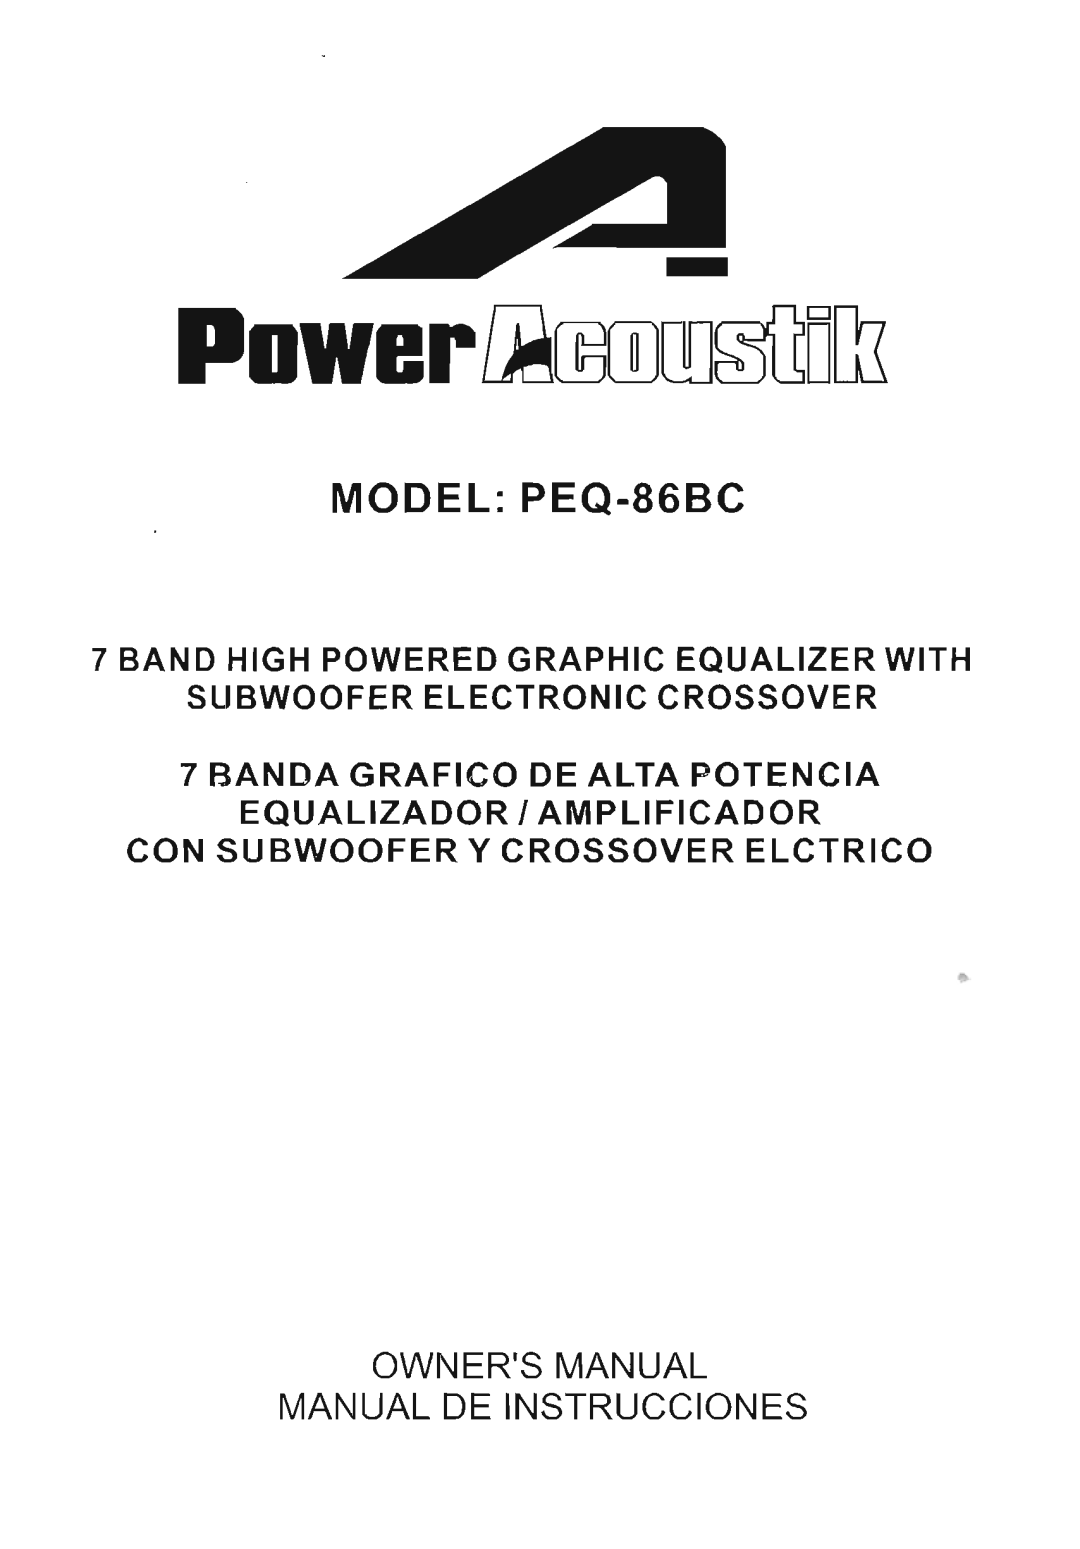 Power Acoustik PEQ-86BC manual 